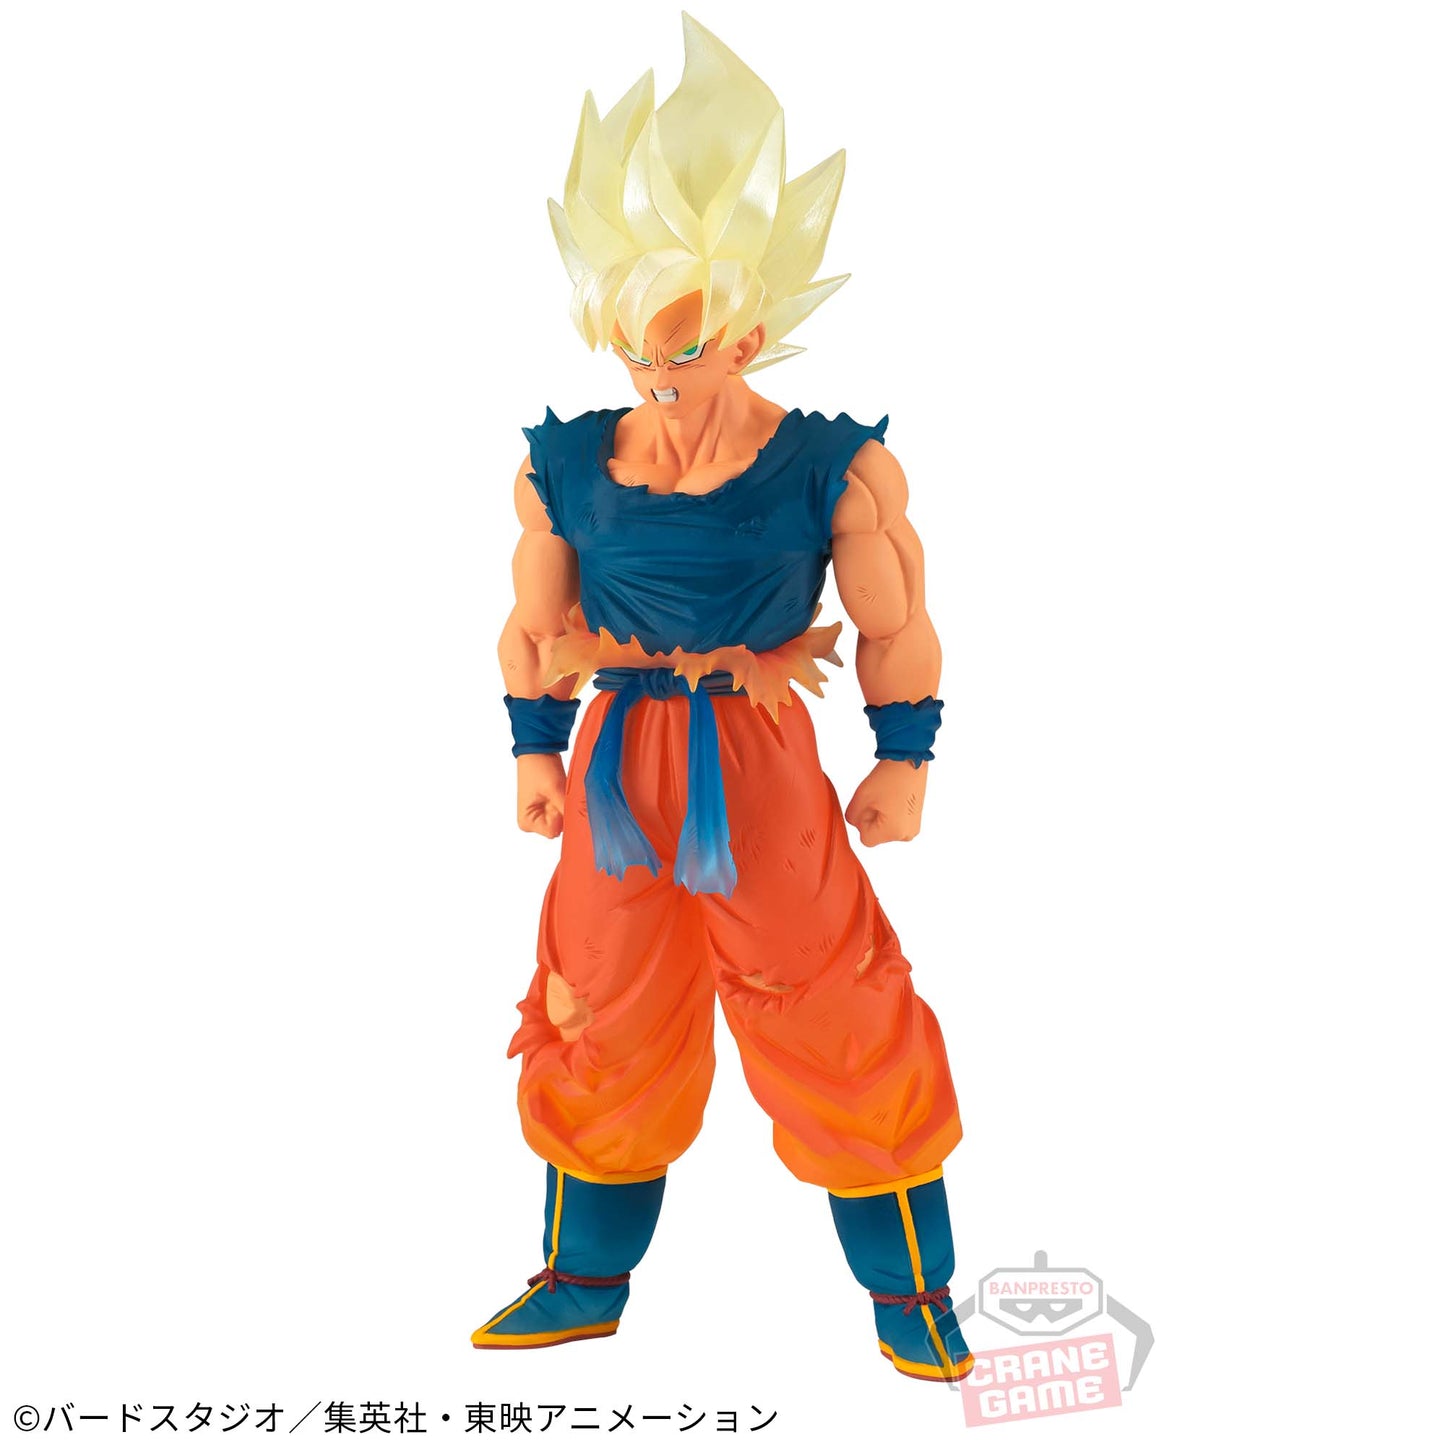 Banpresto Dragon Ball Z Clearise Goku SSJ Figure Buy